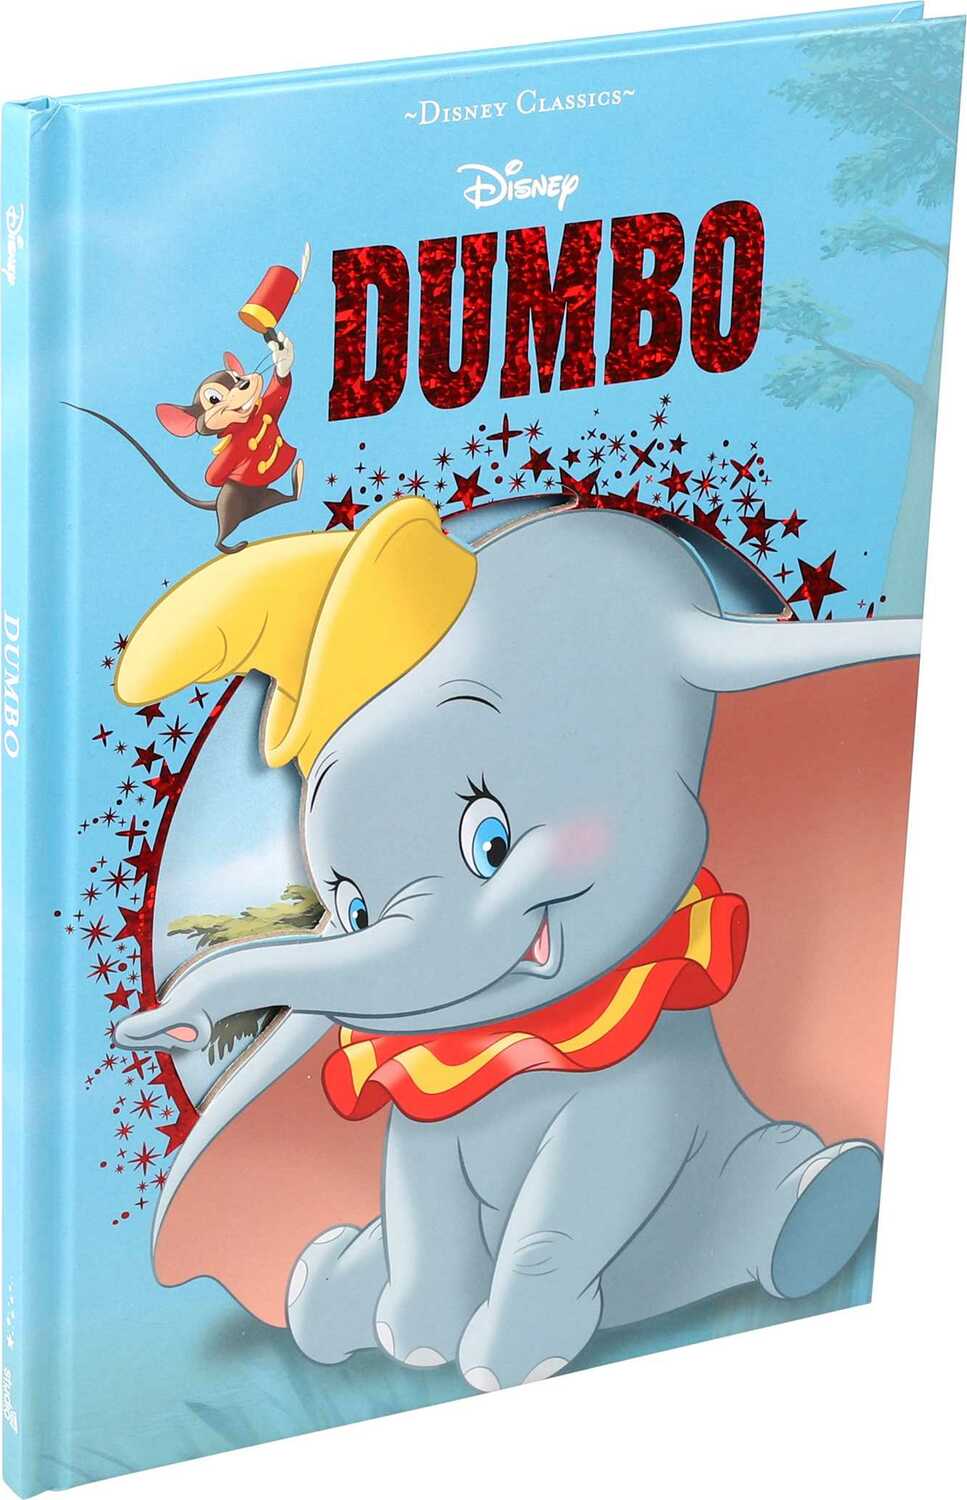 DISNEY DUMBO - A Child's Delight